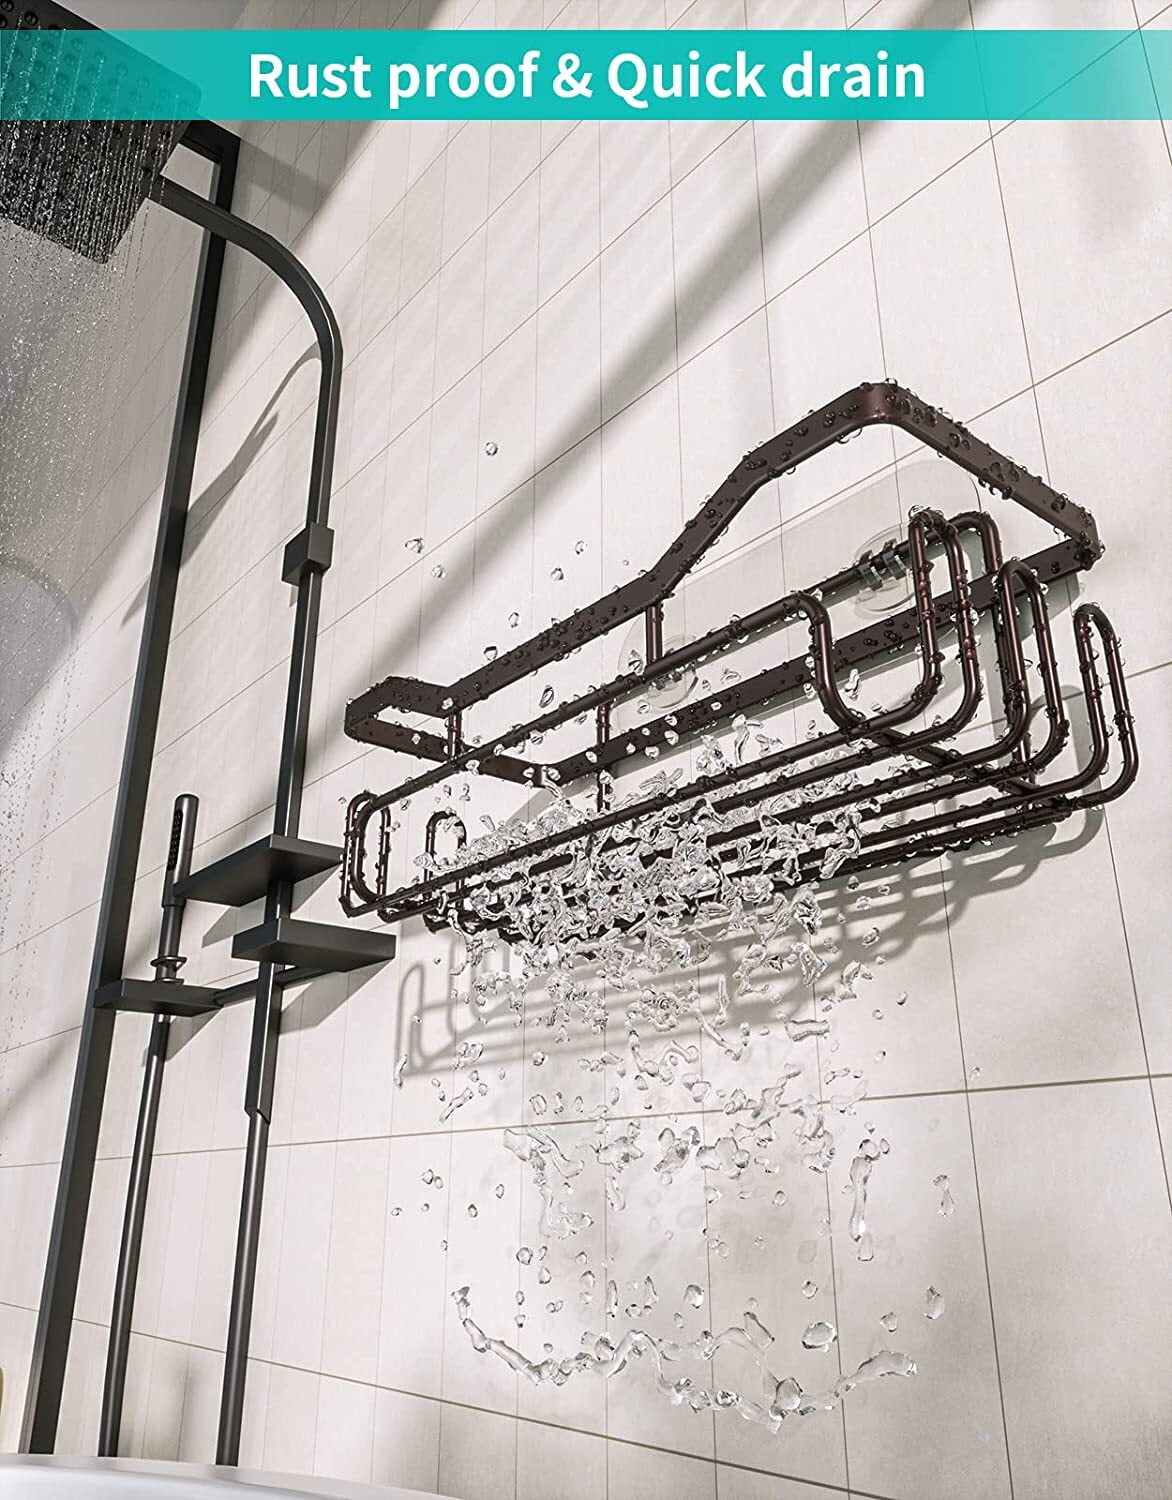 HapiRm Shower Caddy over Shower Head, Rustproof & Waterproof Shower Shelf  with 4 Movable Hooks, No Drilling Black Shower Rack Hanging for Bathroom,2-Shelves,Steel  